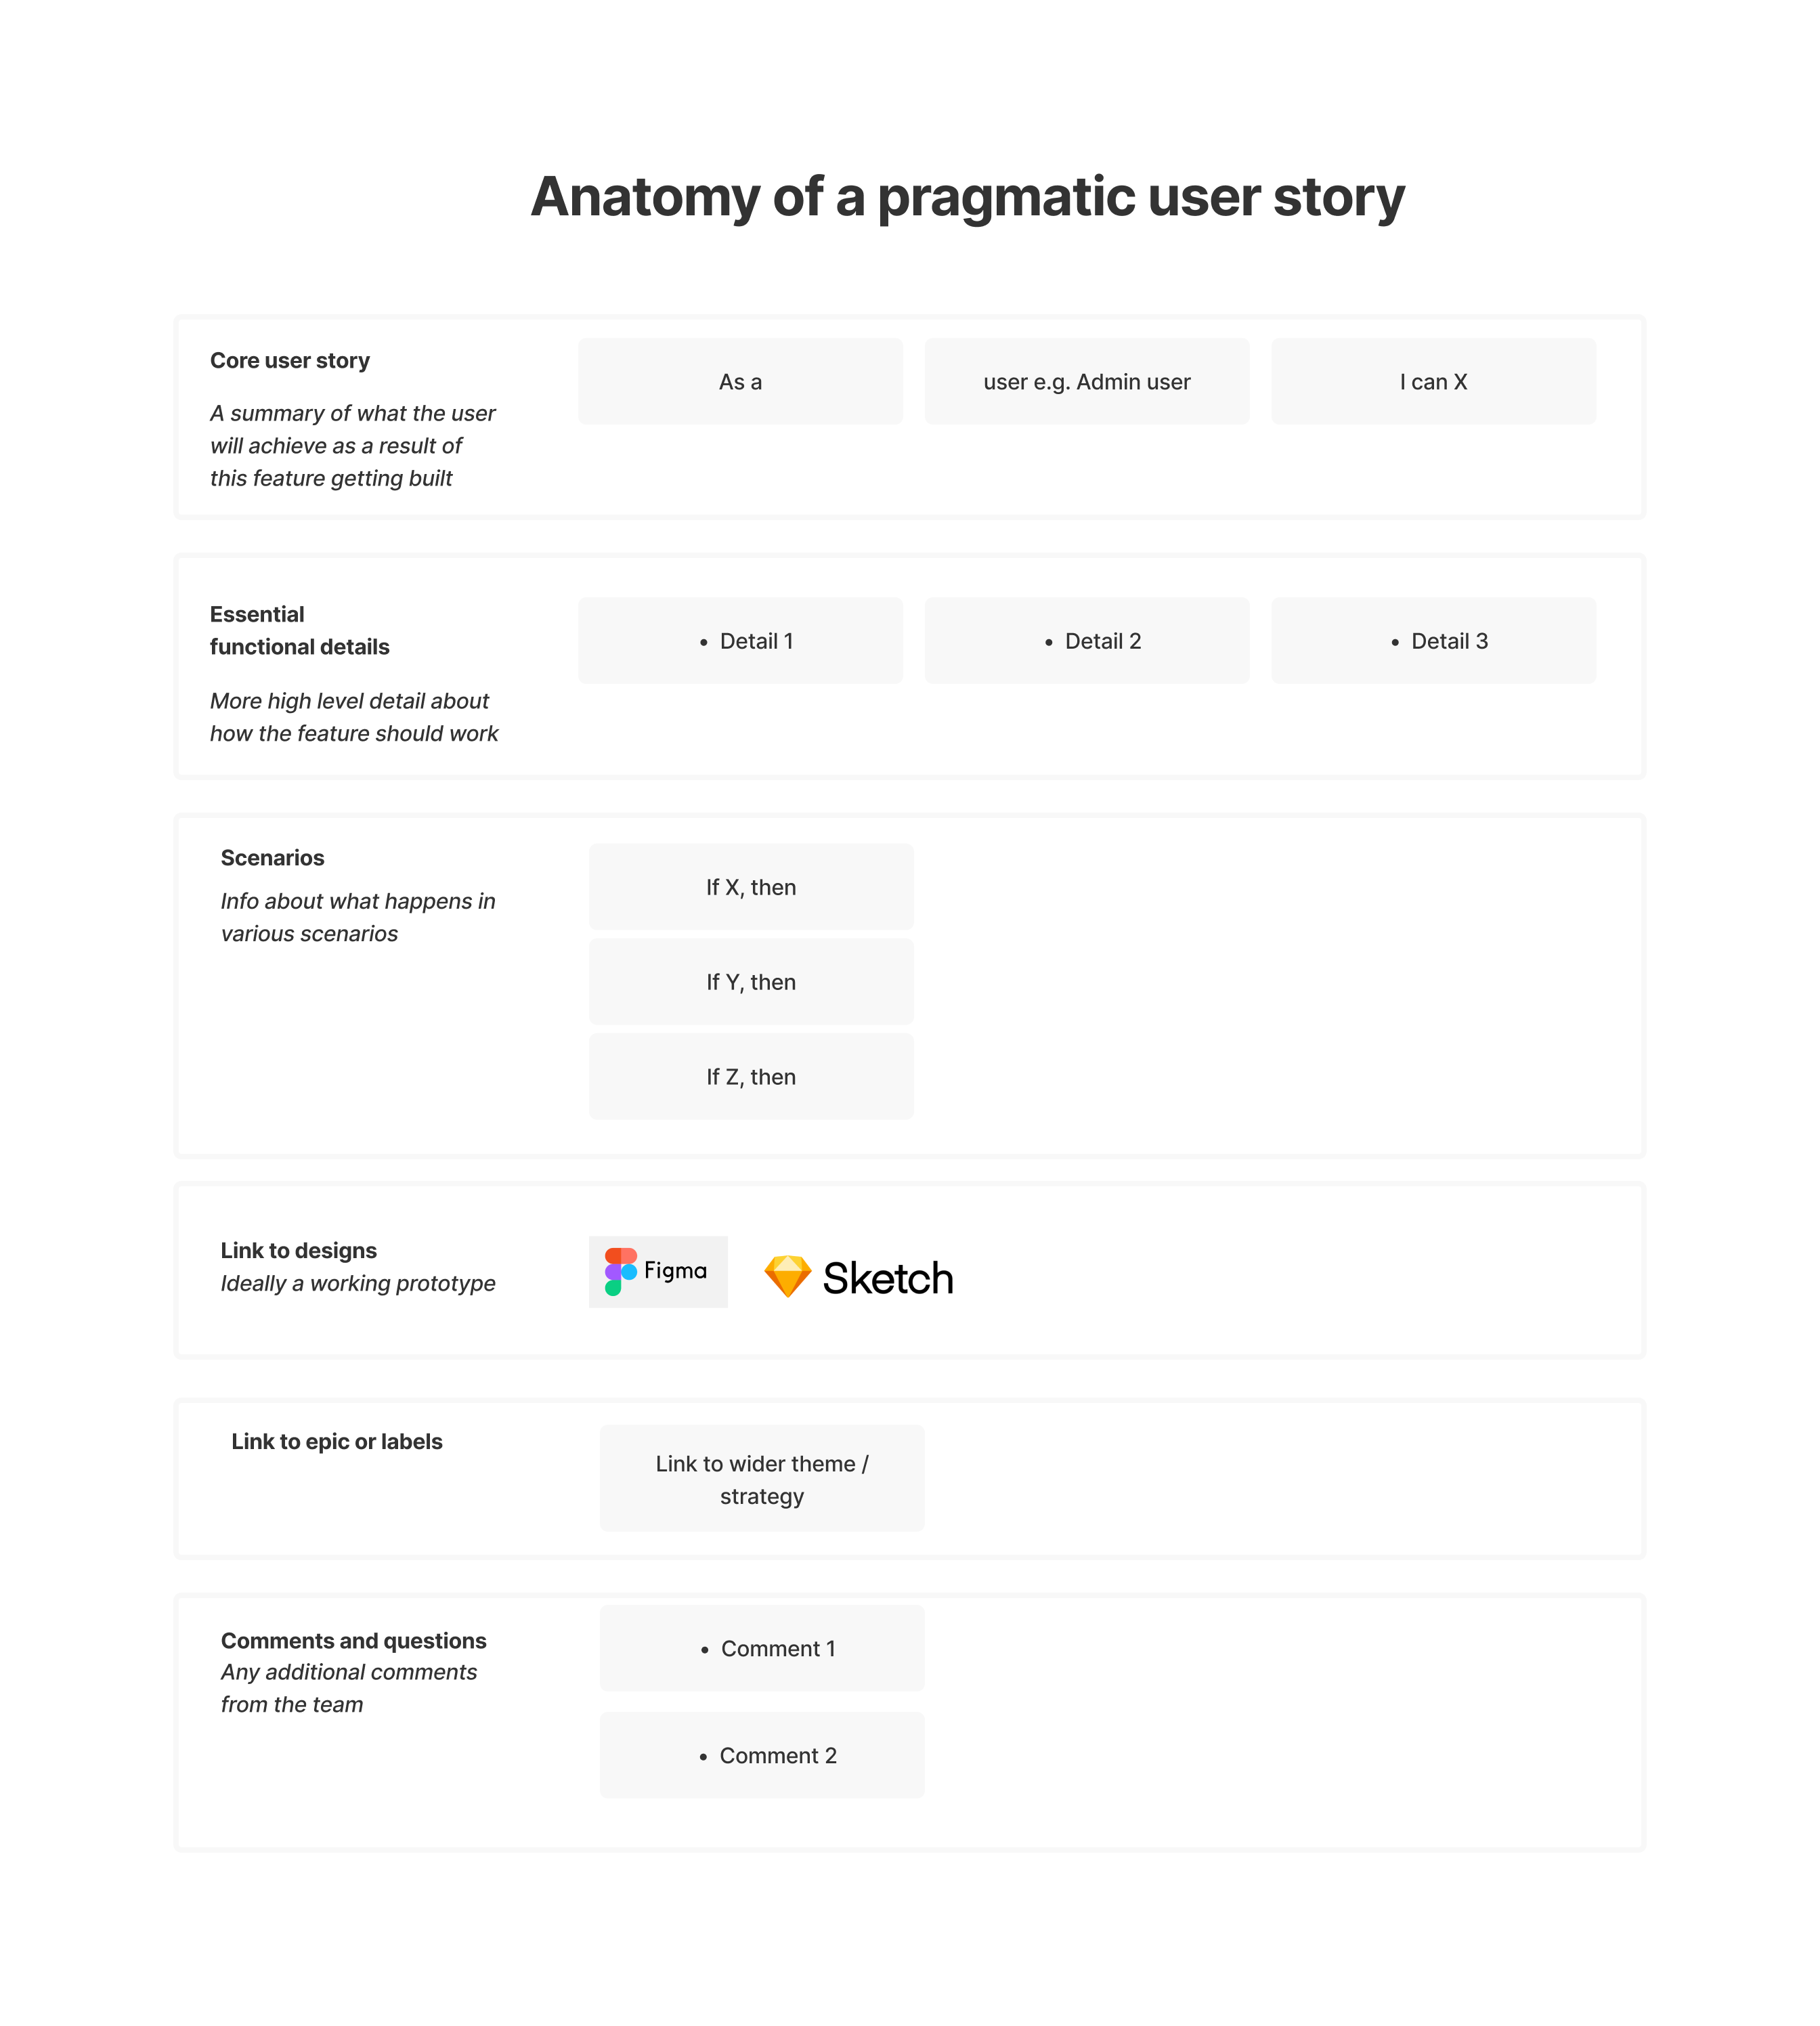 the anatomy of a pragmatic user story